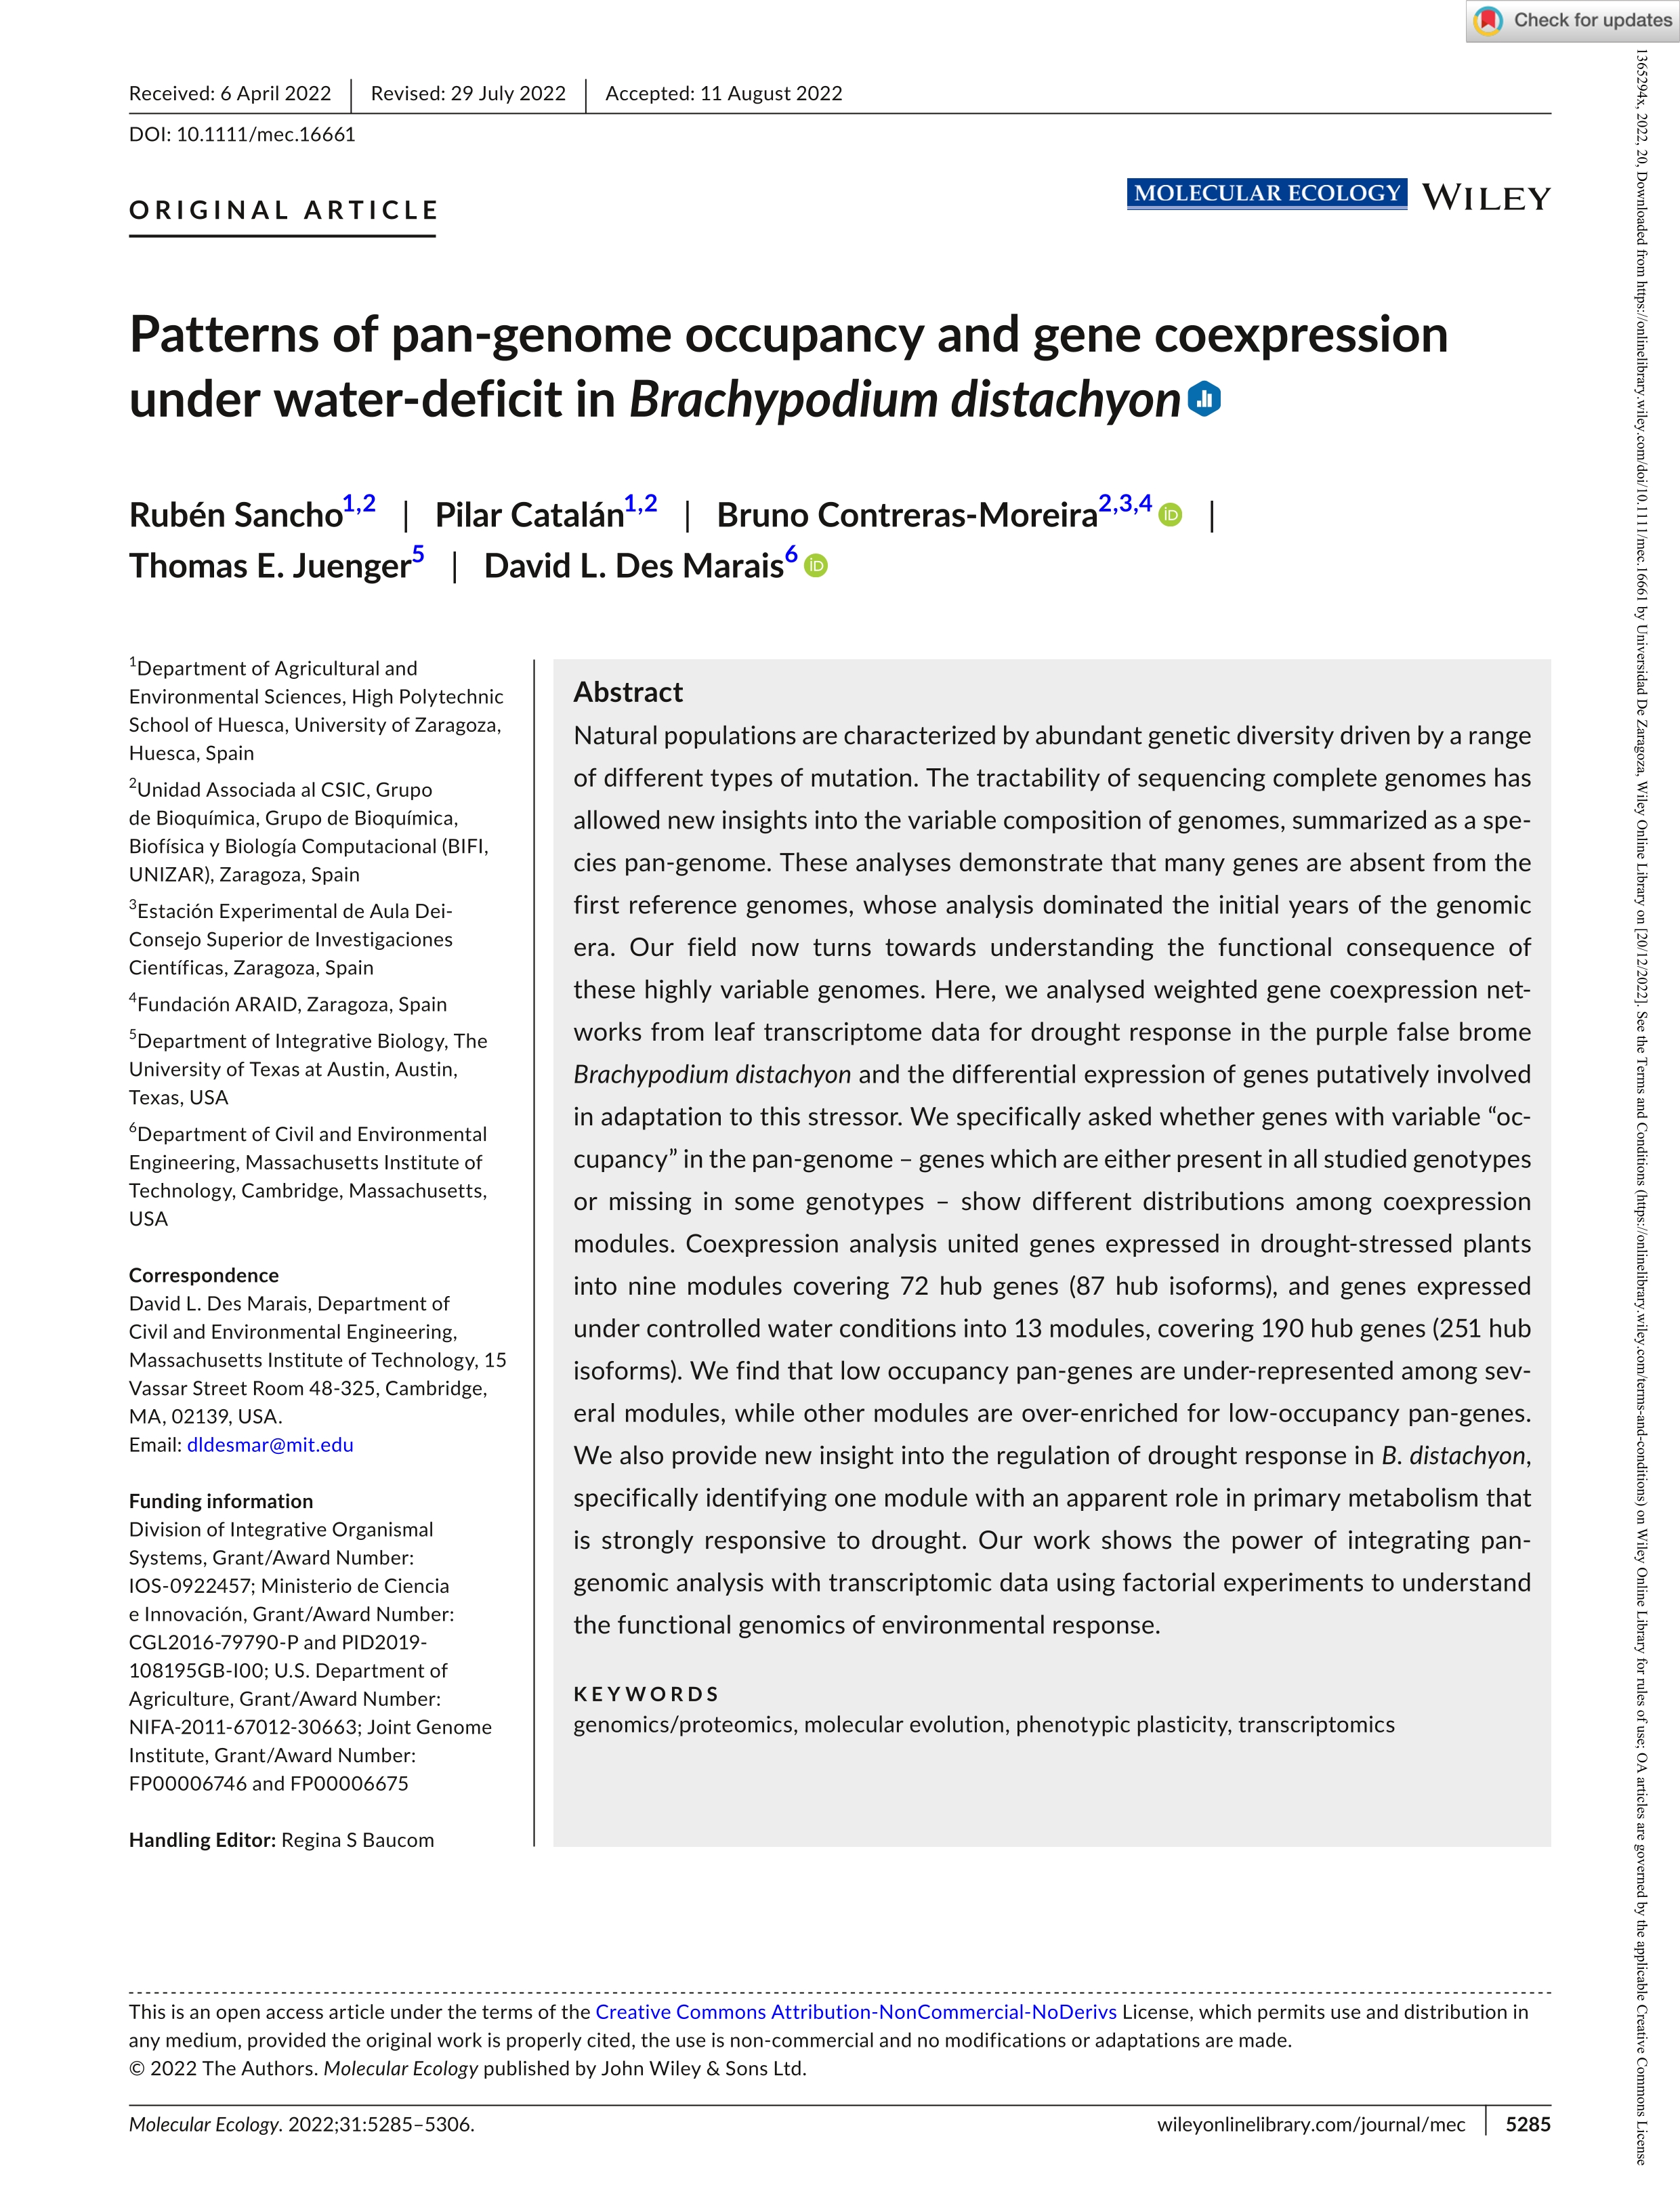 Patterns of pan-genome occupancy and gene coexpression under water-deficit in Brachypodium distachyon